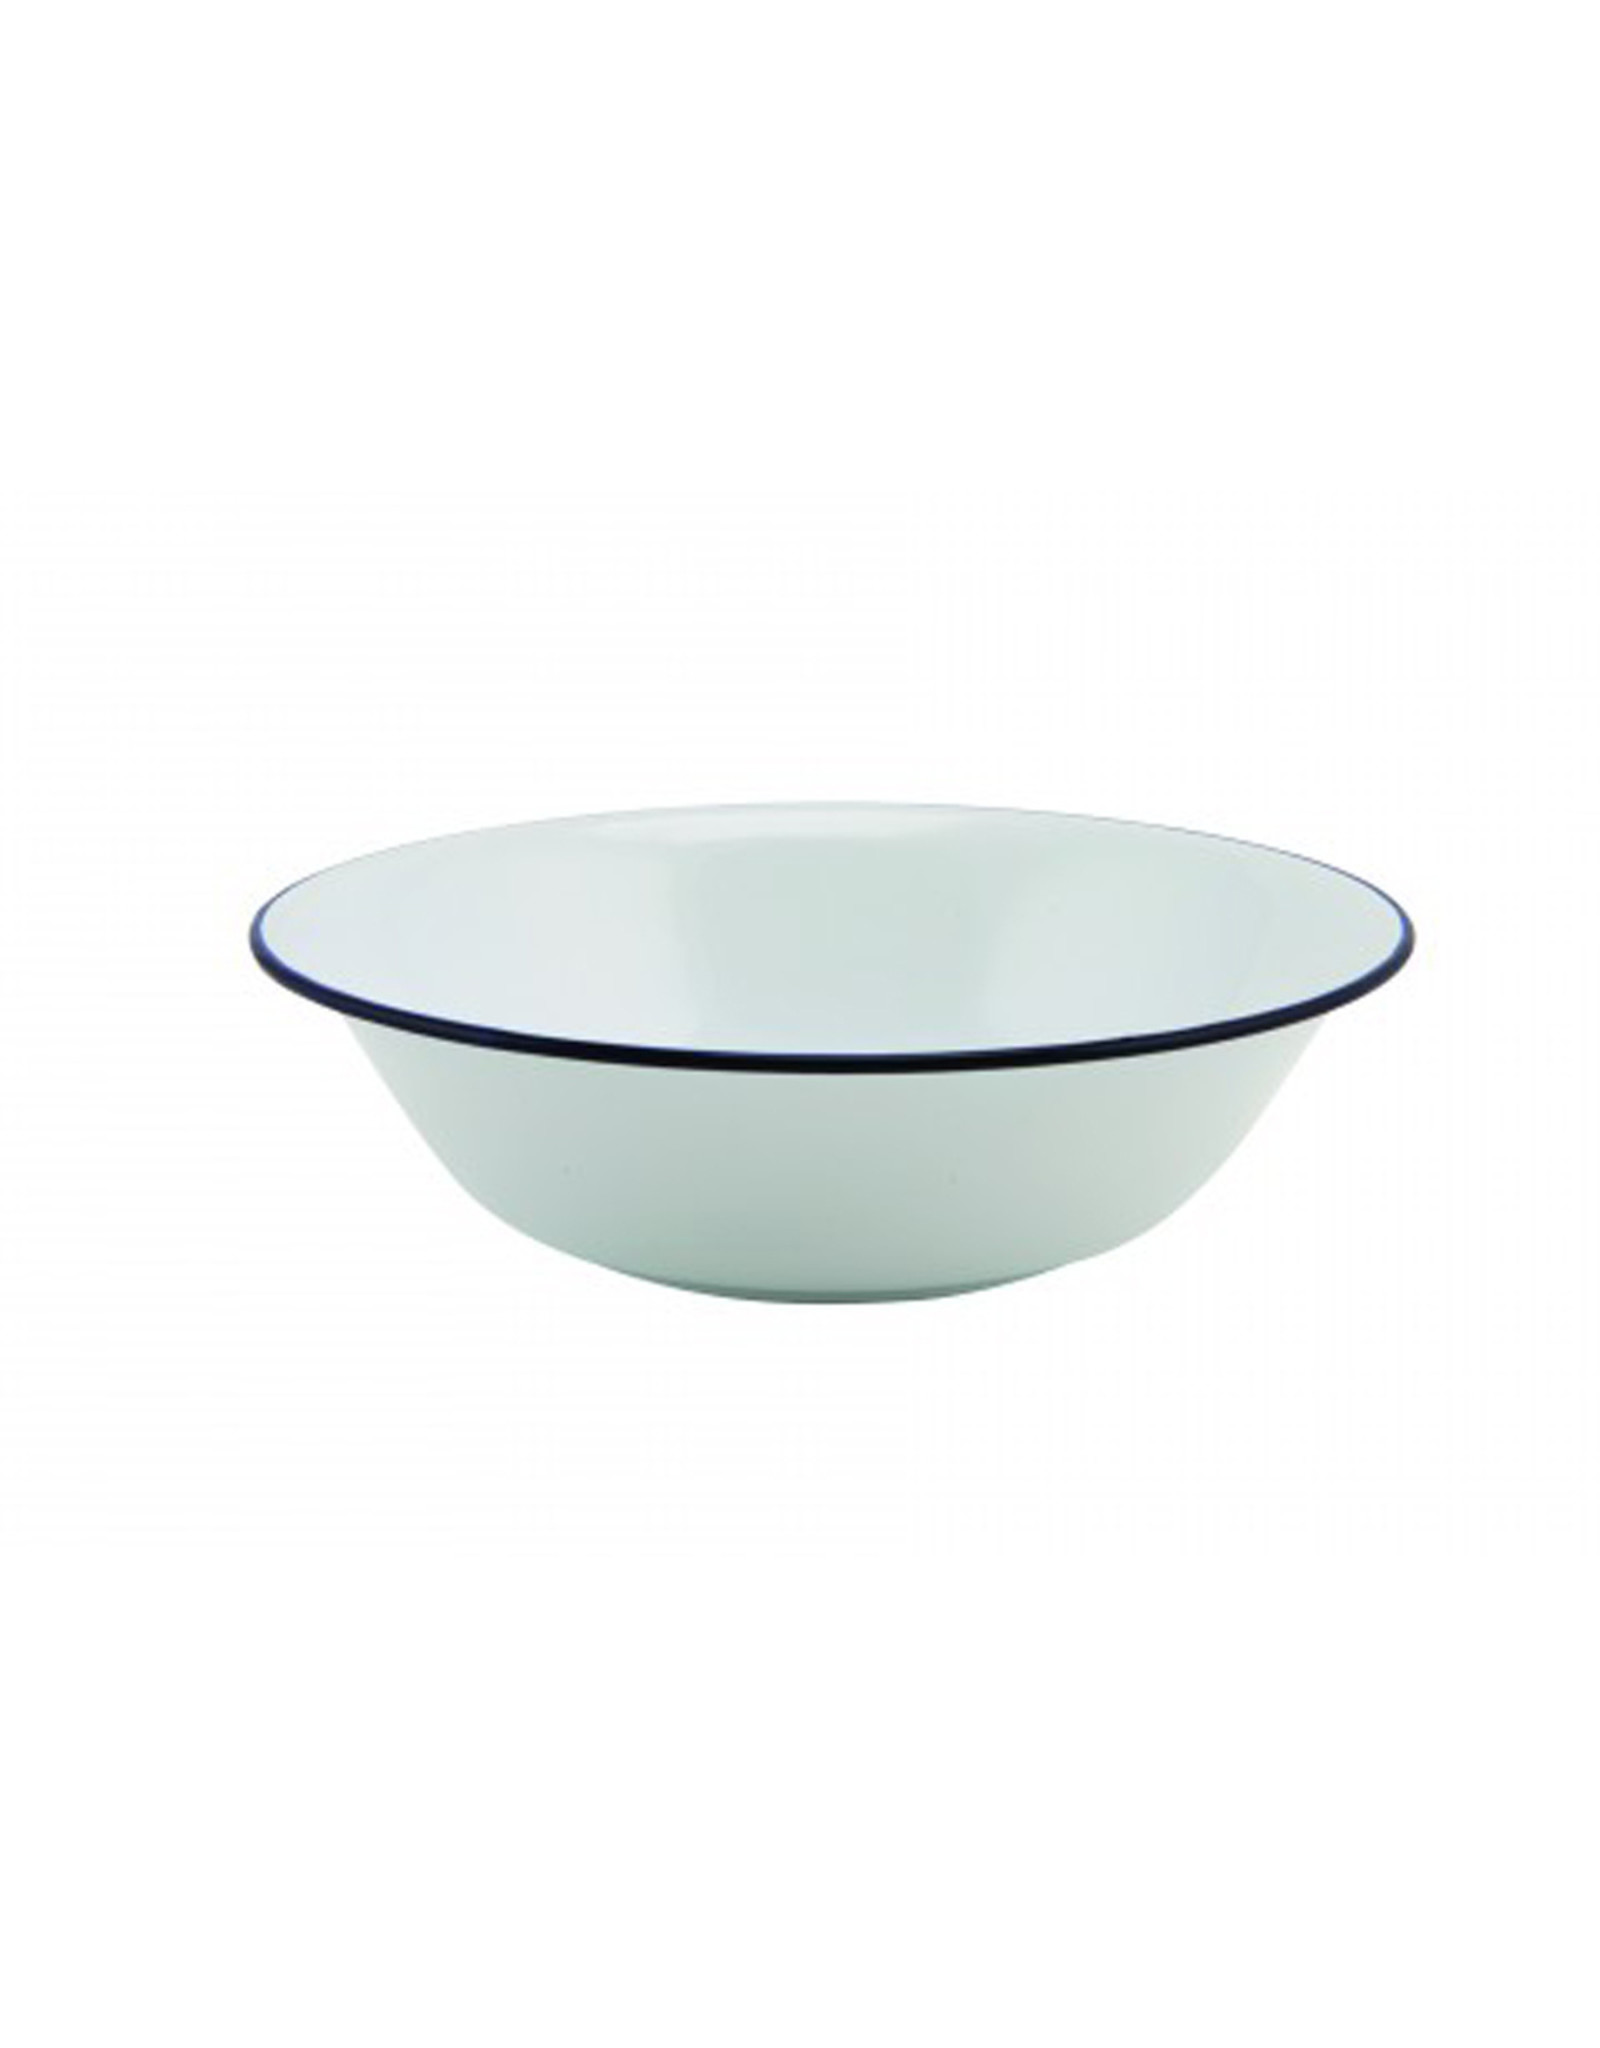 Stylepoint Enamel bowl with blue rim 16 cm